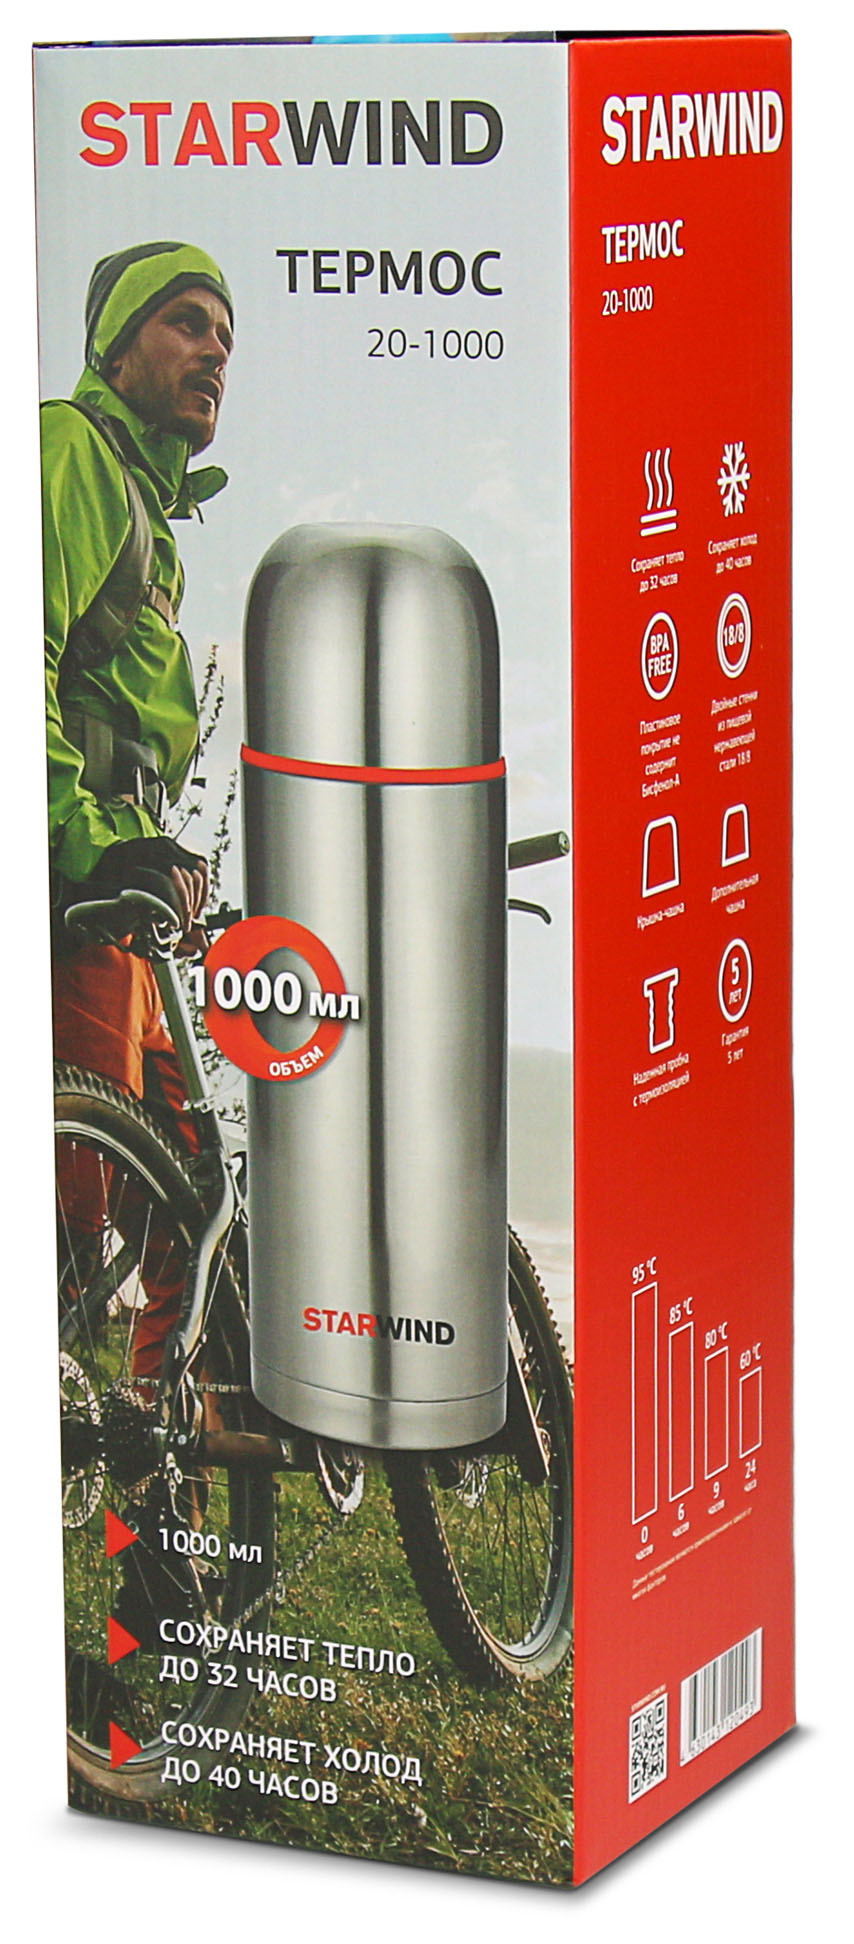 Термос Starwind 20-1000, 1л, серебристый/красный от магазина Старвинд